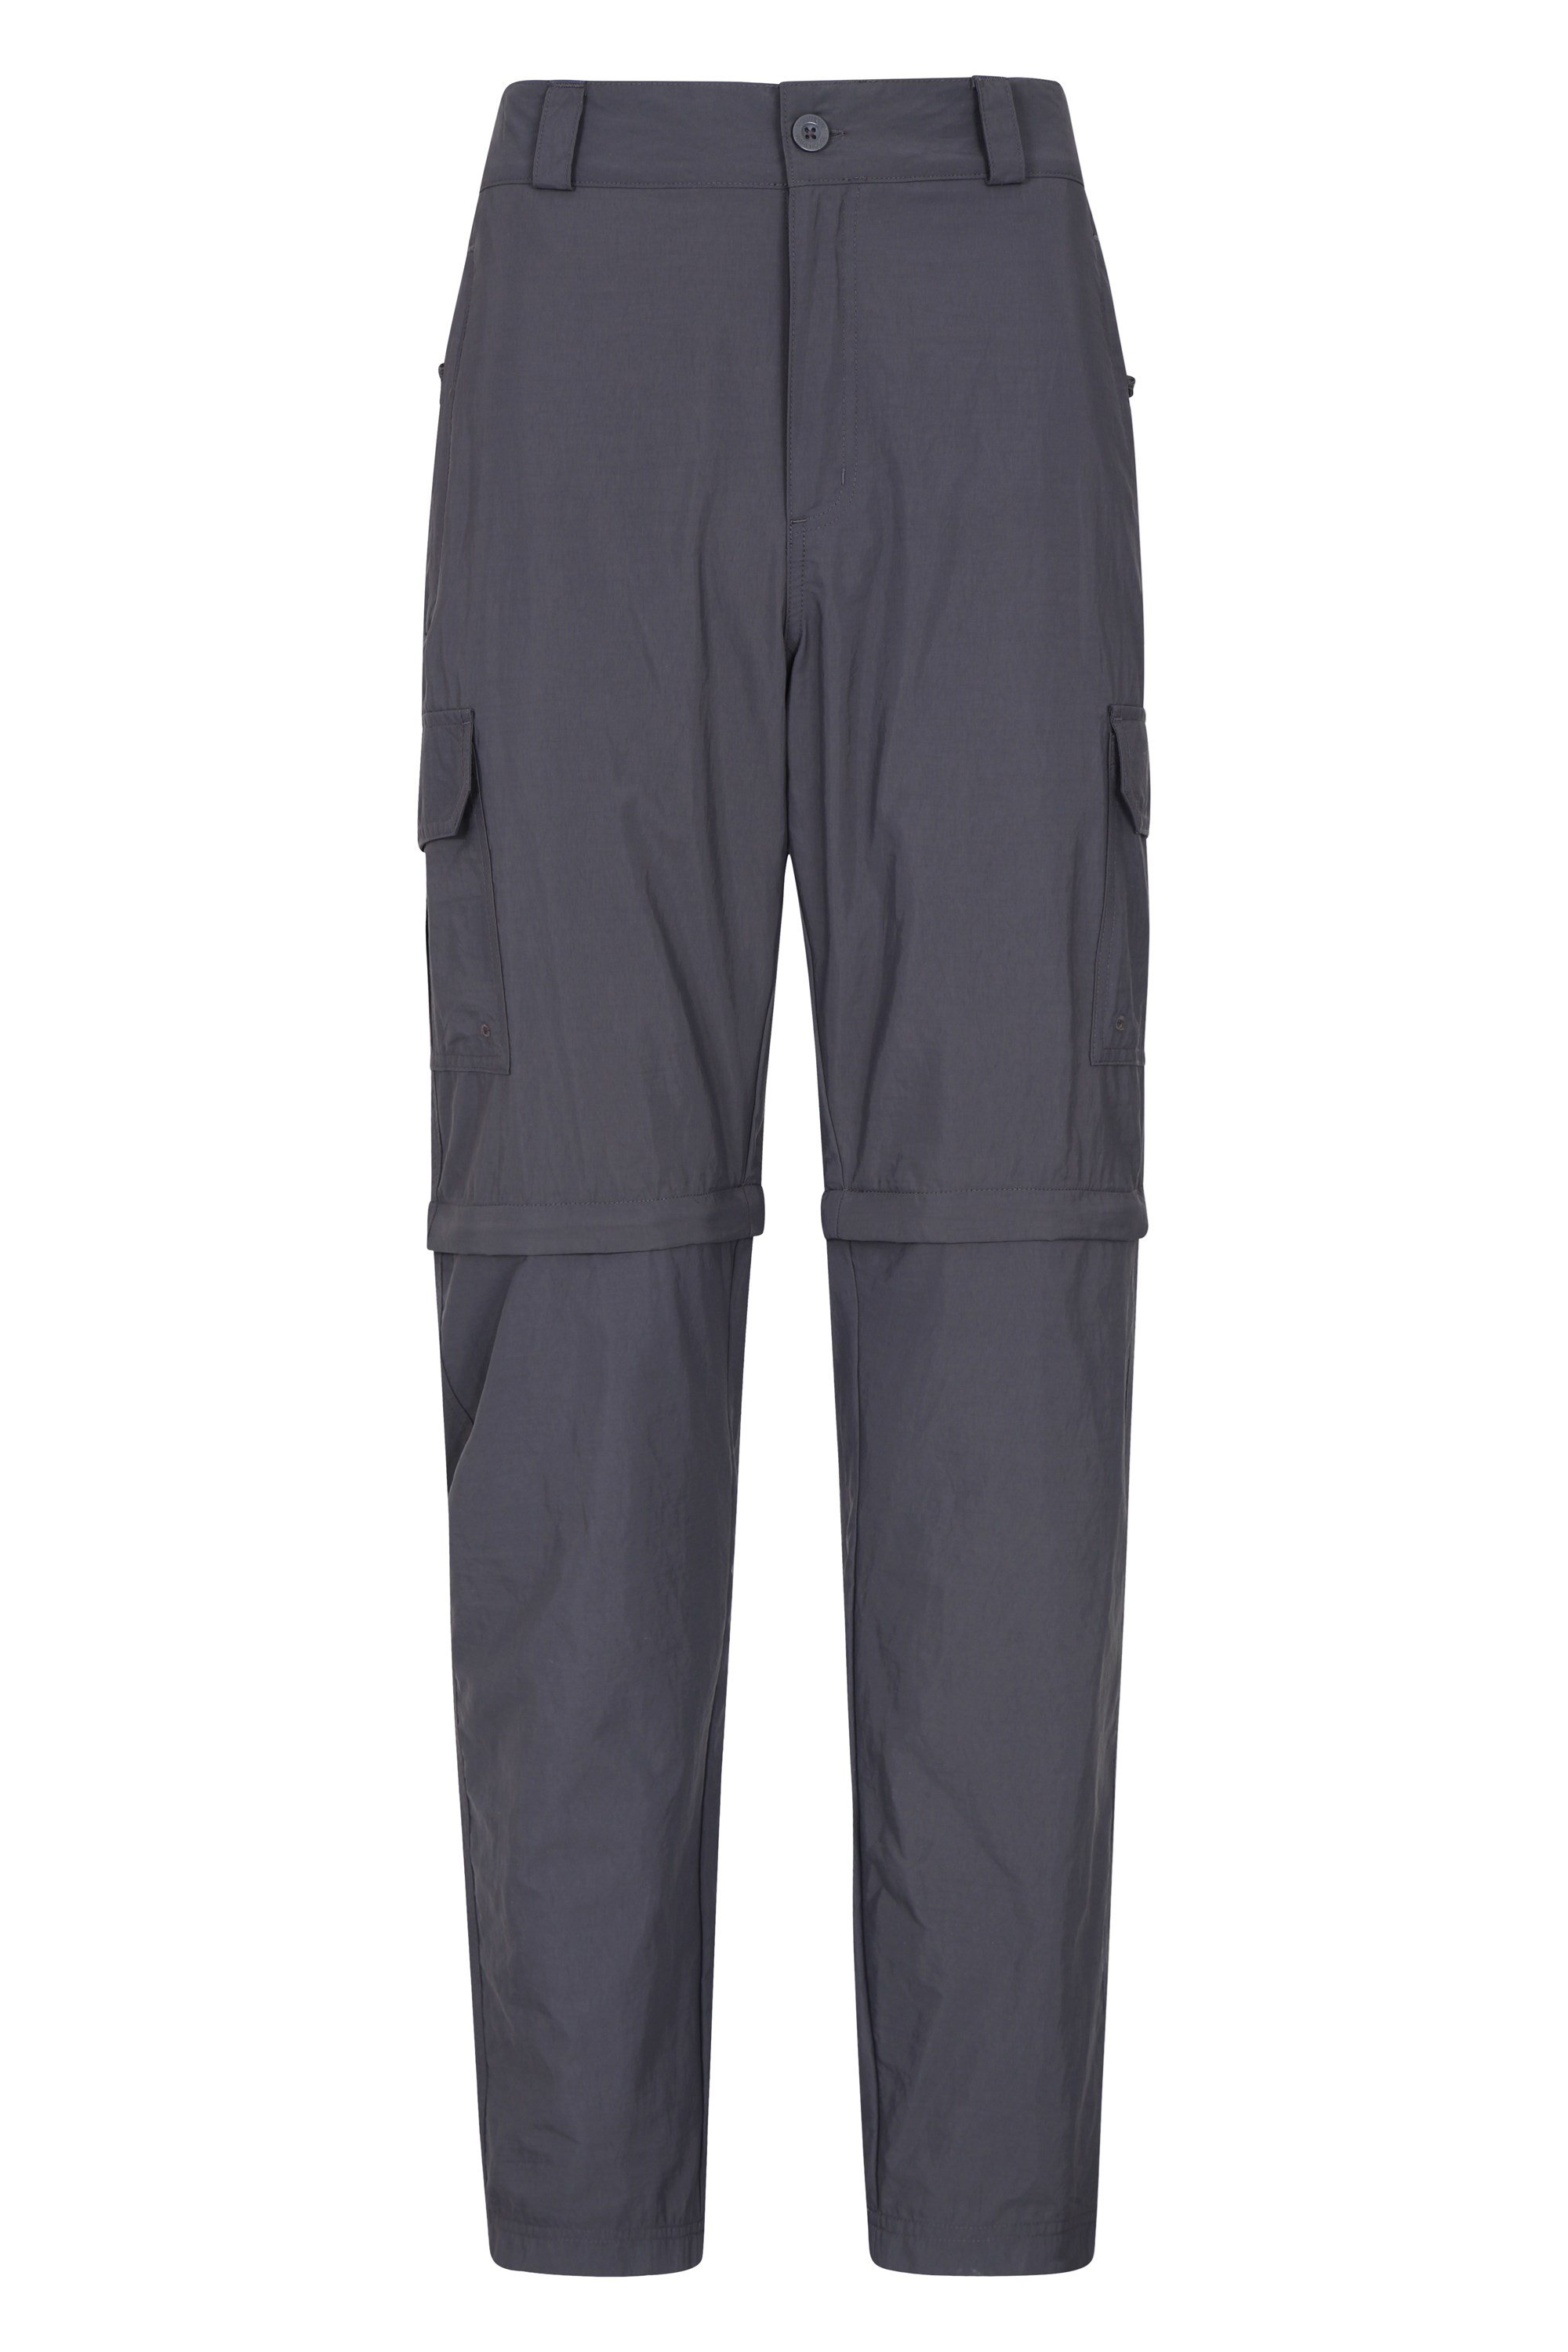 Explore Mens Zip-Off Trousers - Short Length - Grey